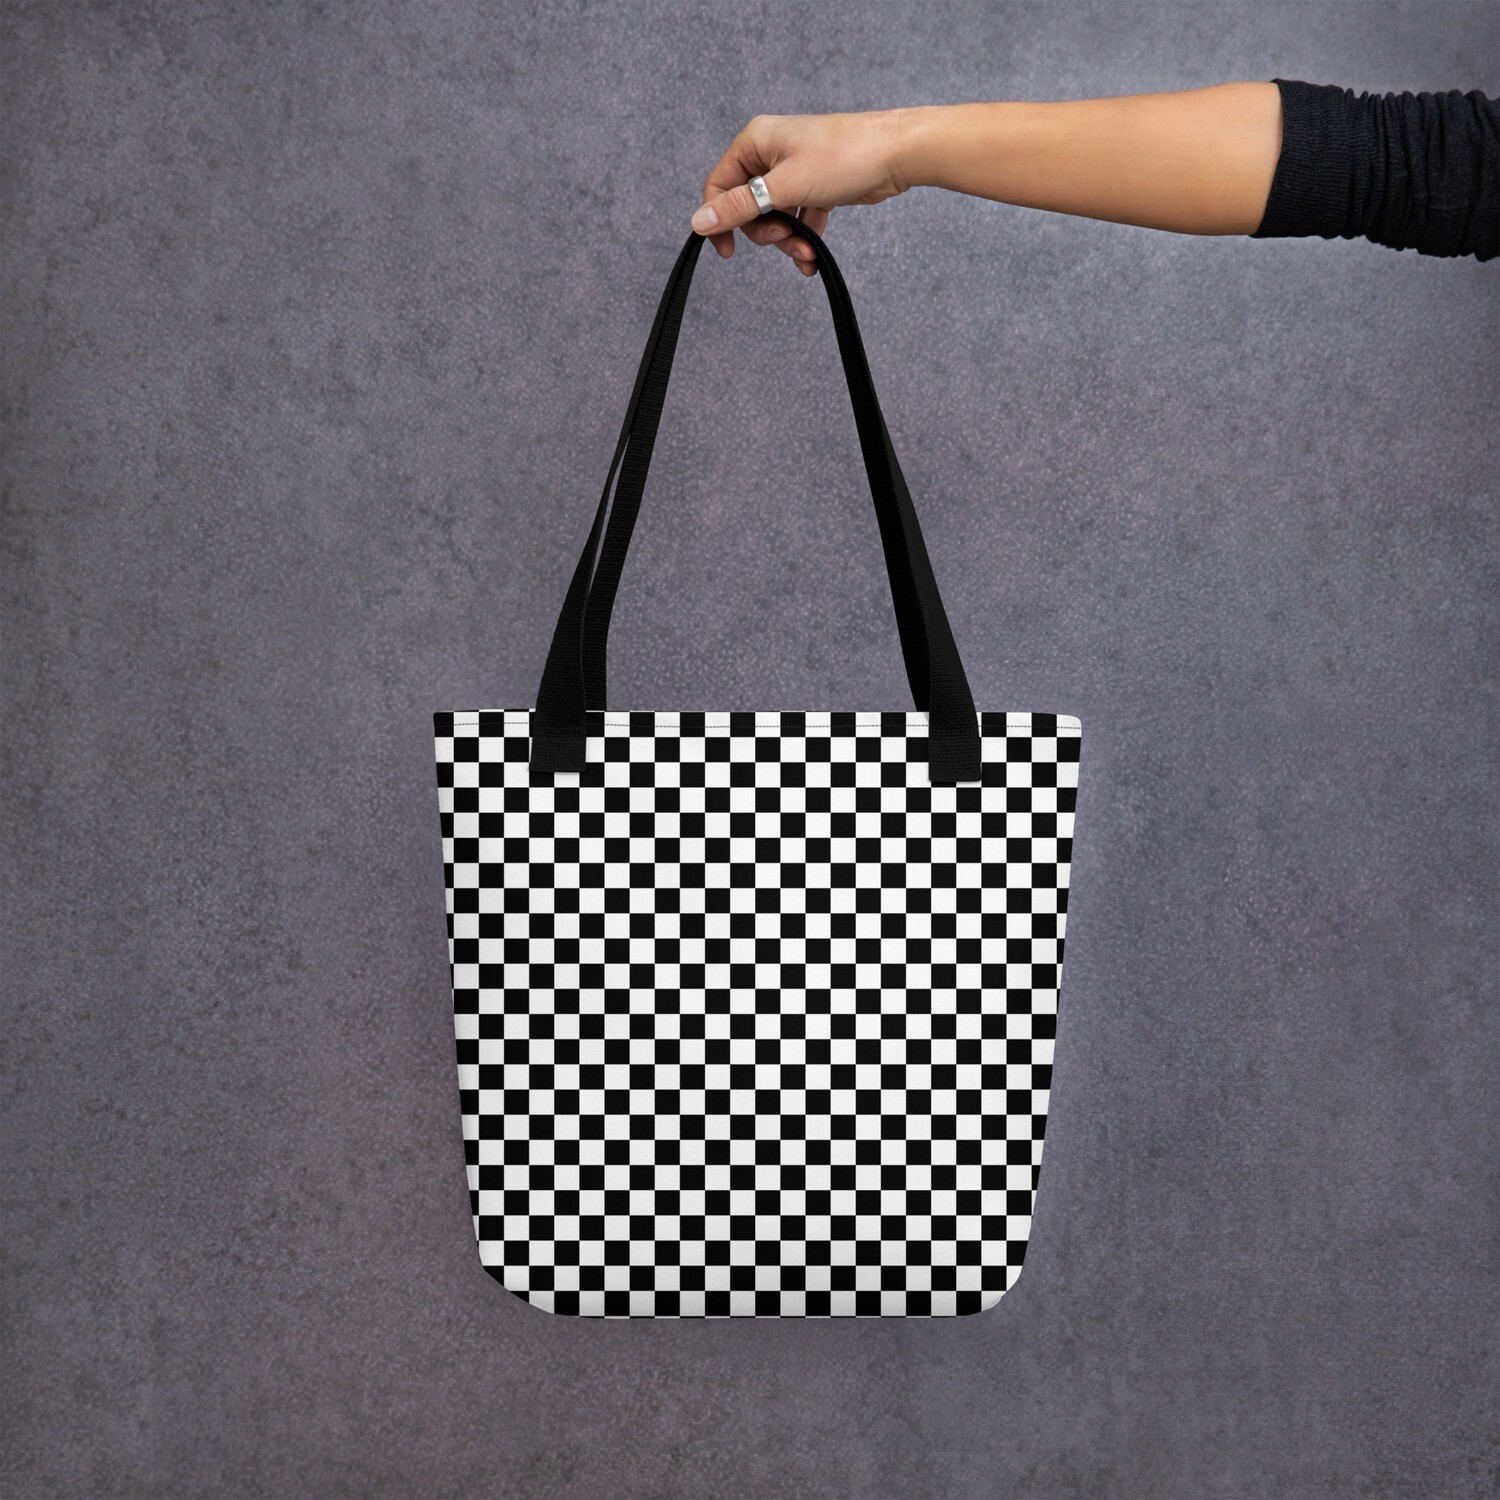 Black and white checkered tote bag